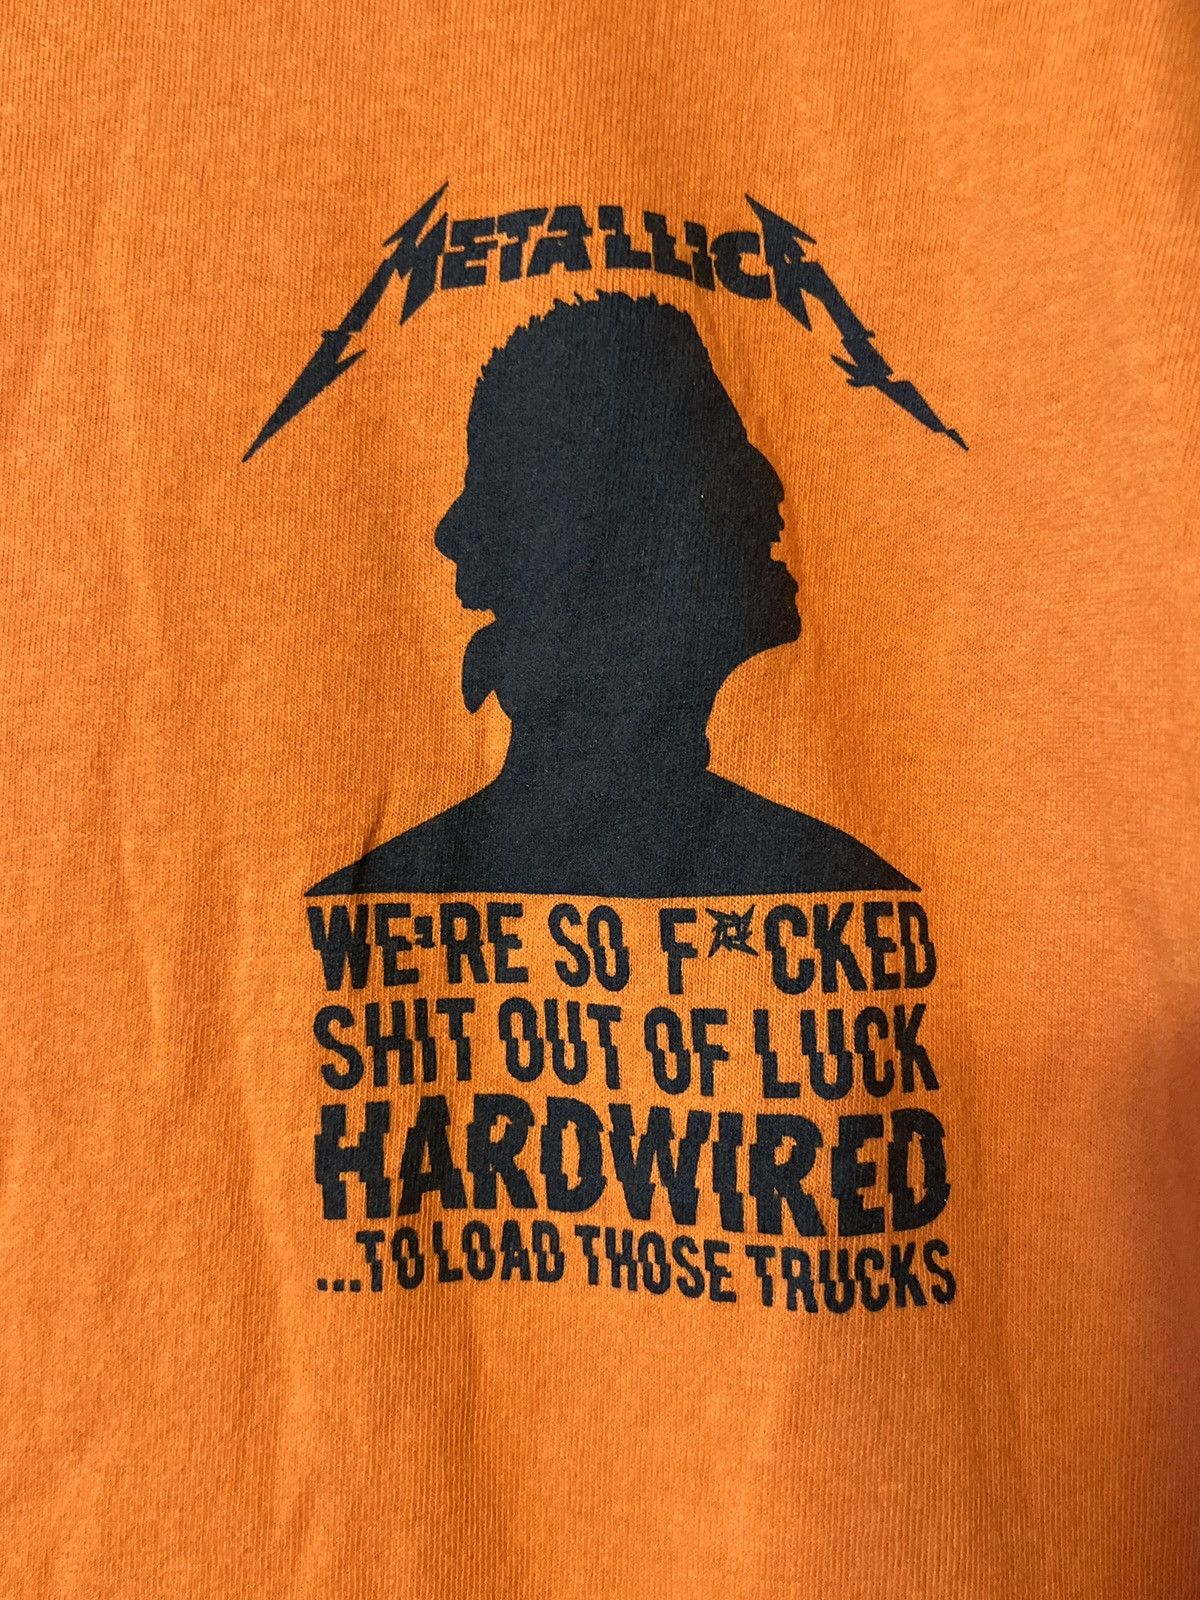 Metallica Metallica Hardwired Tour Crew T Shirt Size XL Orange Concert Size US XL / EU 56 / 4 - 2 Preview